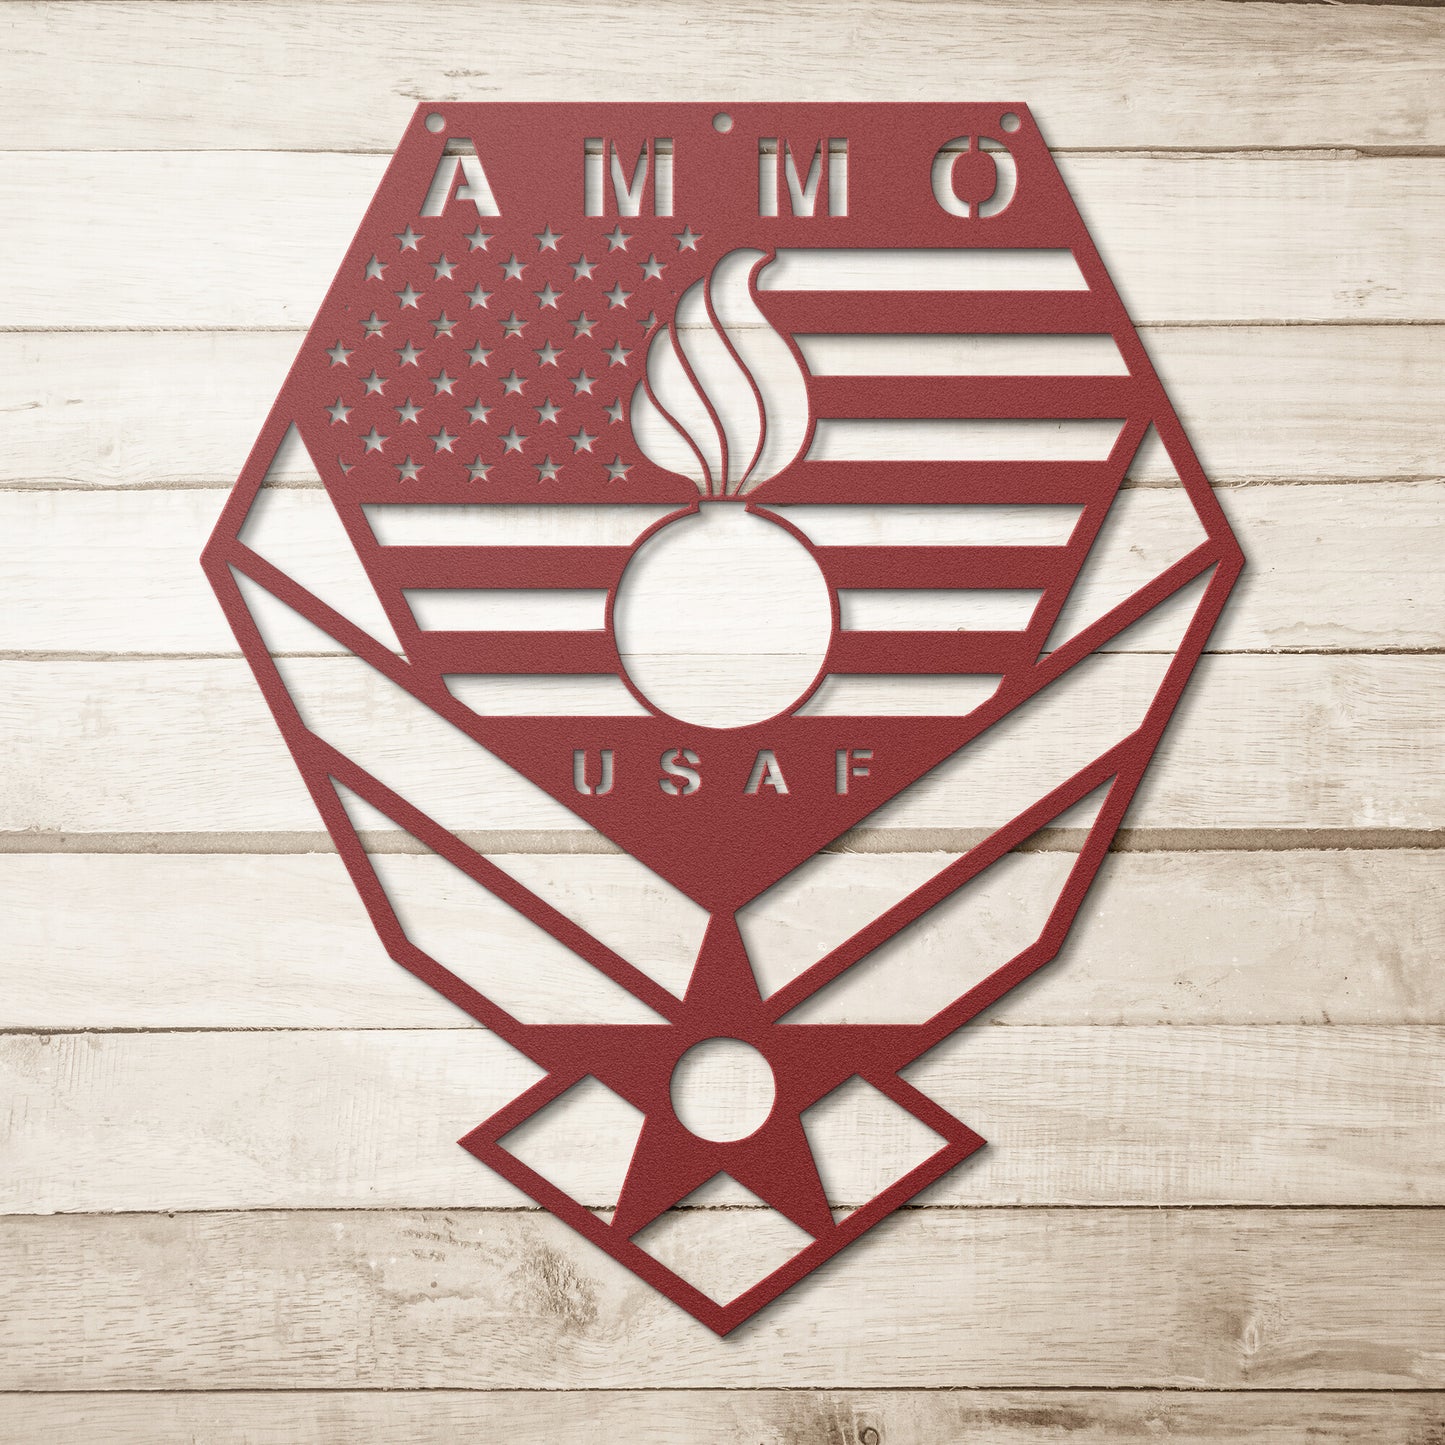 USAF AMMO Pisspot Stars Stripes AF Vector With Pentagon Shape Die Cut Hanging Metal Wall Sign